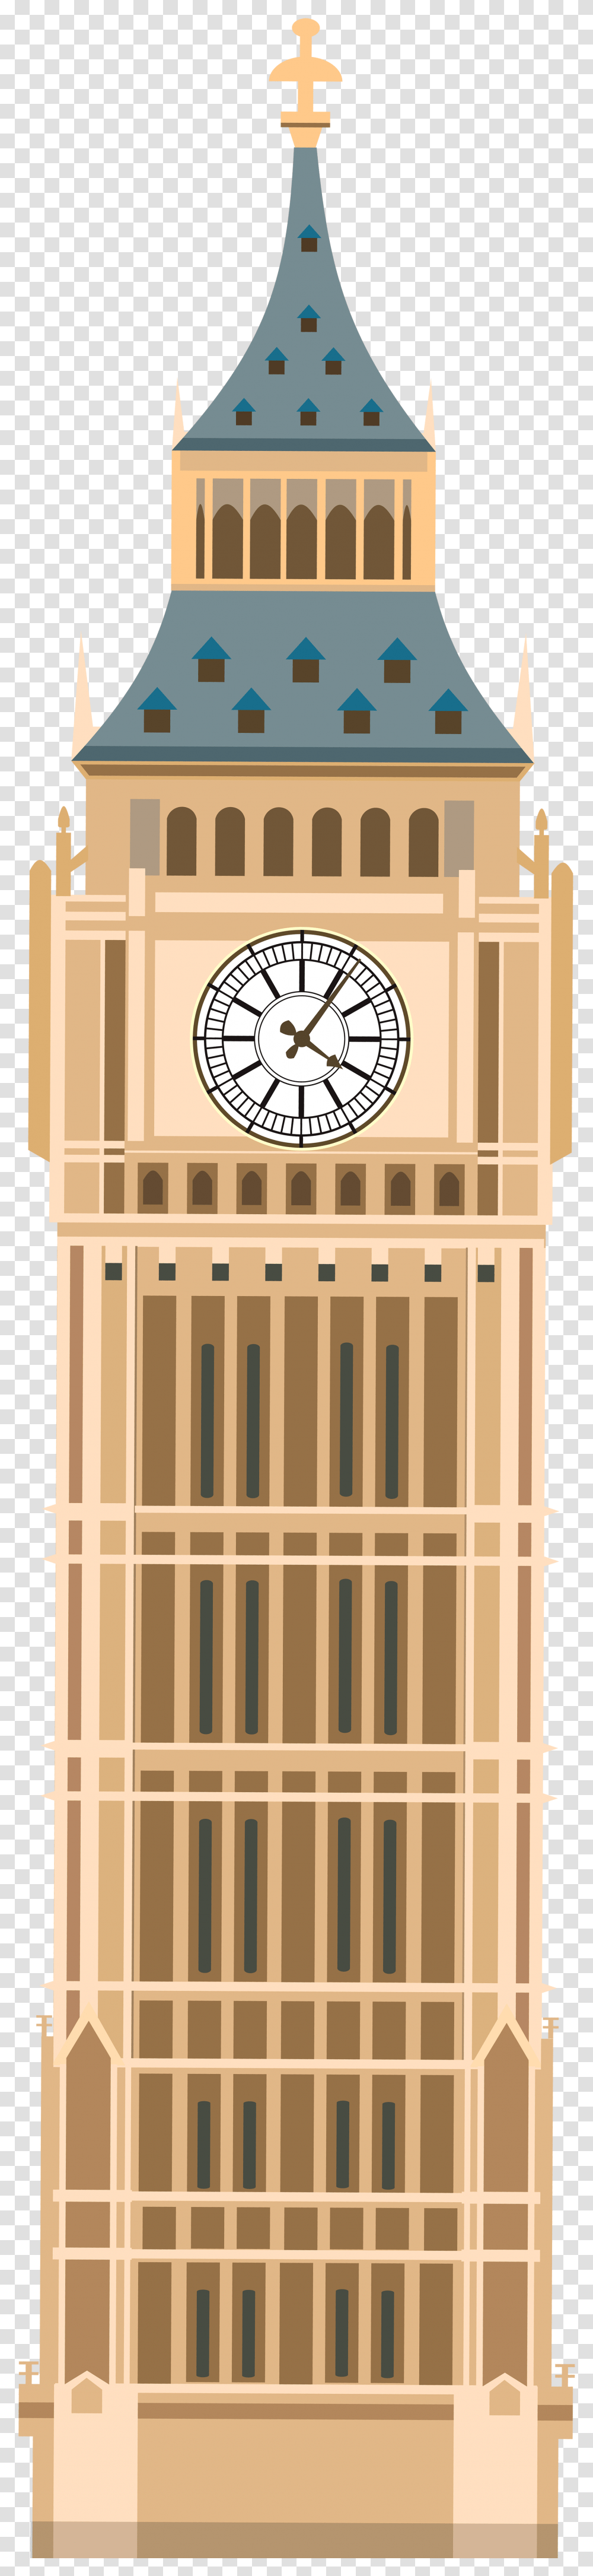 Big Ben Clip Art Big Ben, Architecture, Building, Tower, Analog Clock Transparent Png